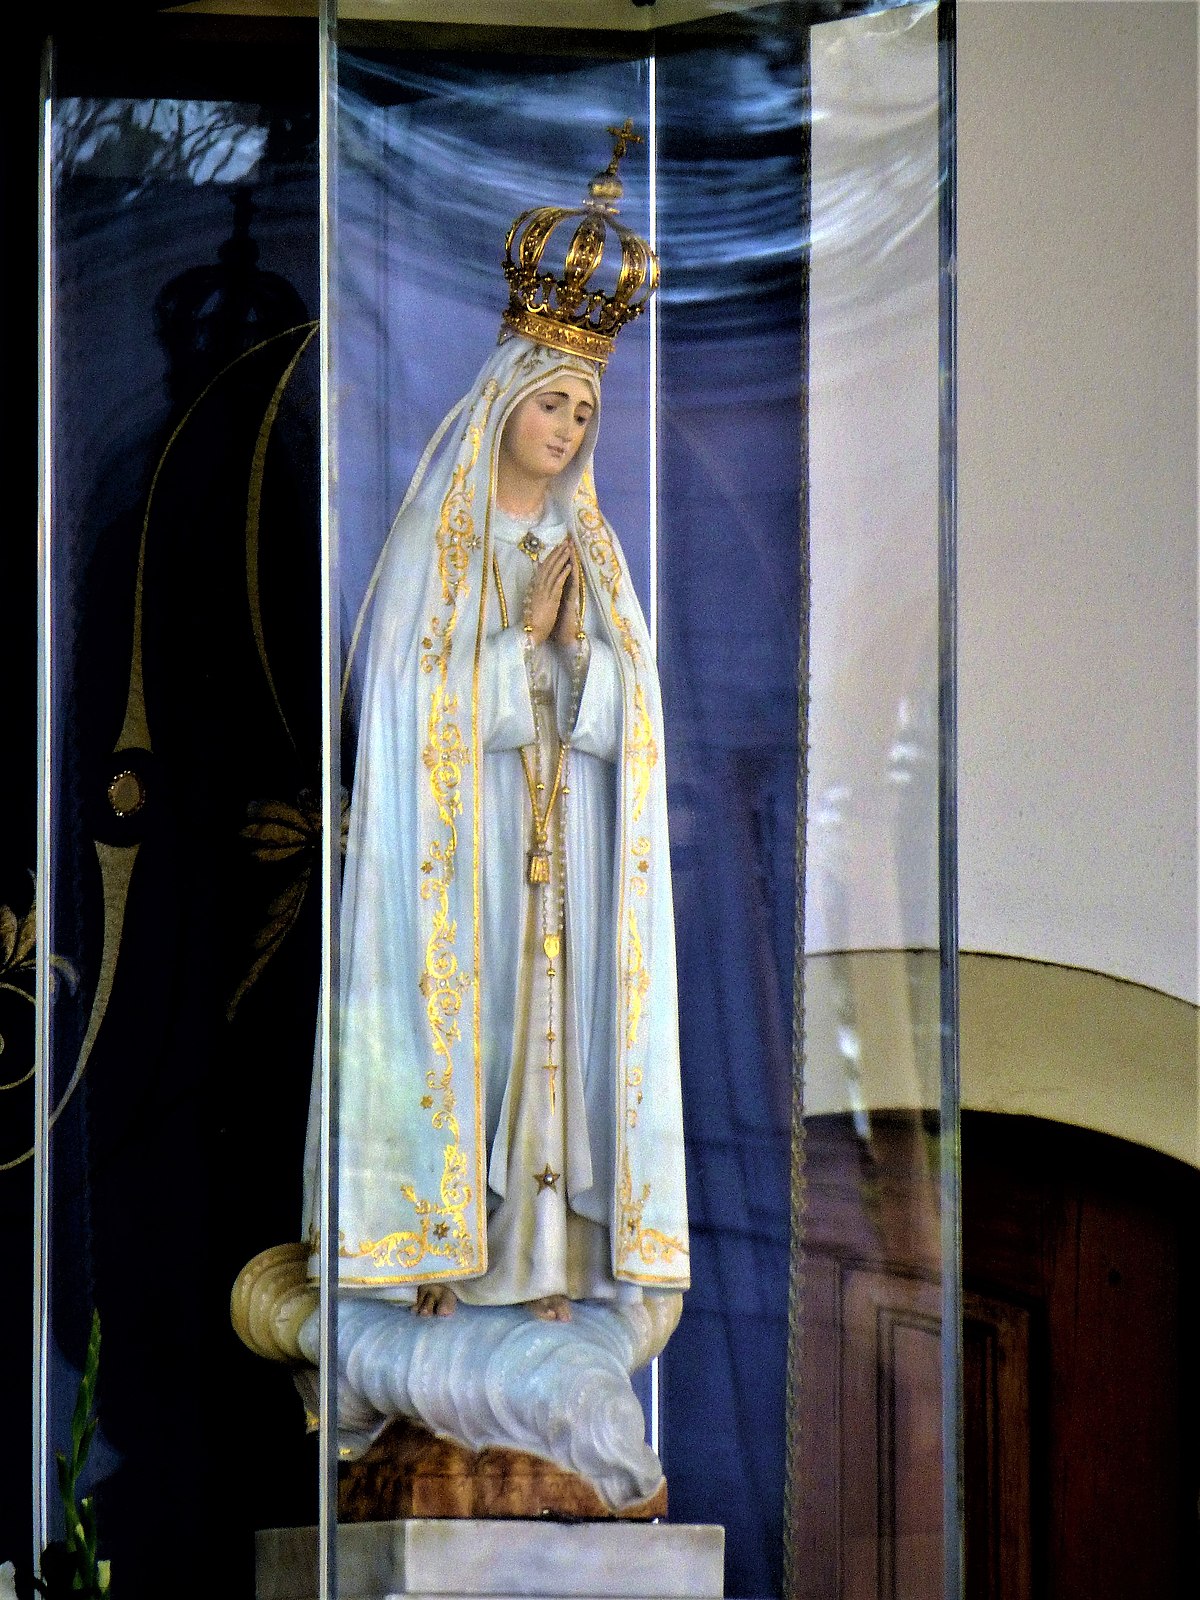 Our Lady of Fátima - Wikipedia